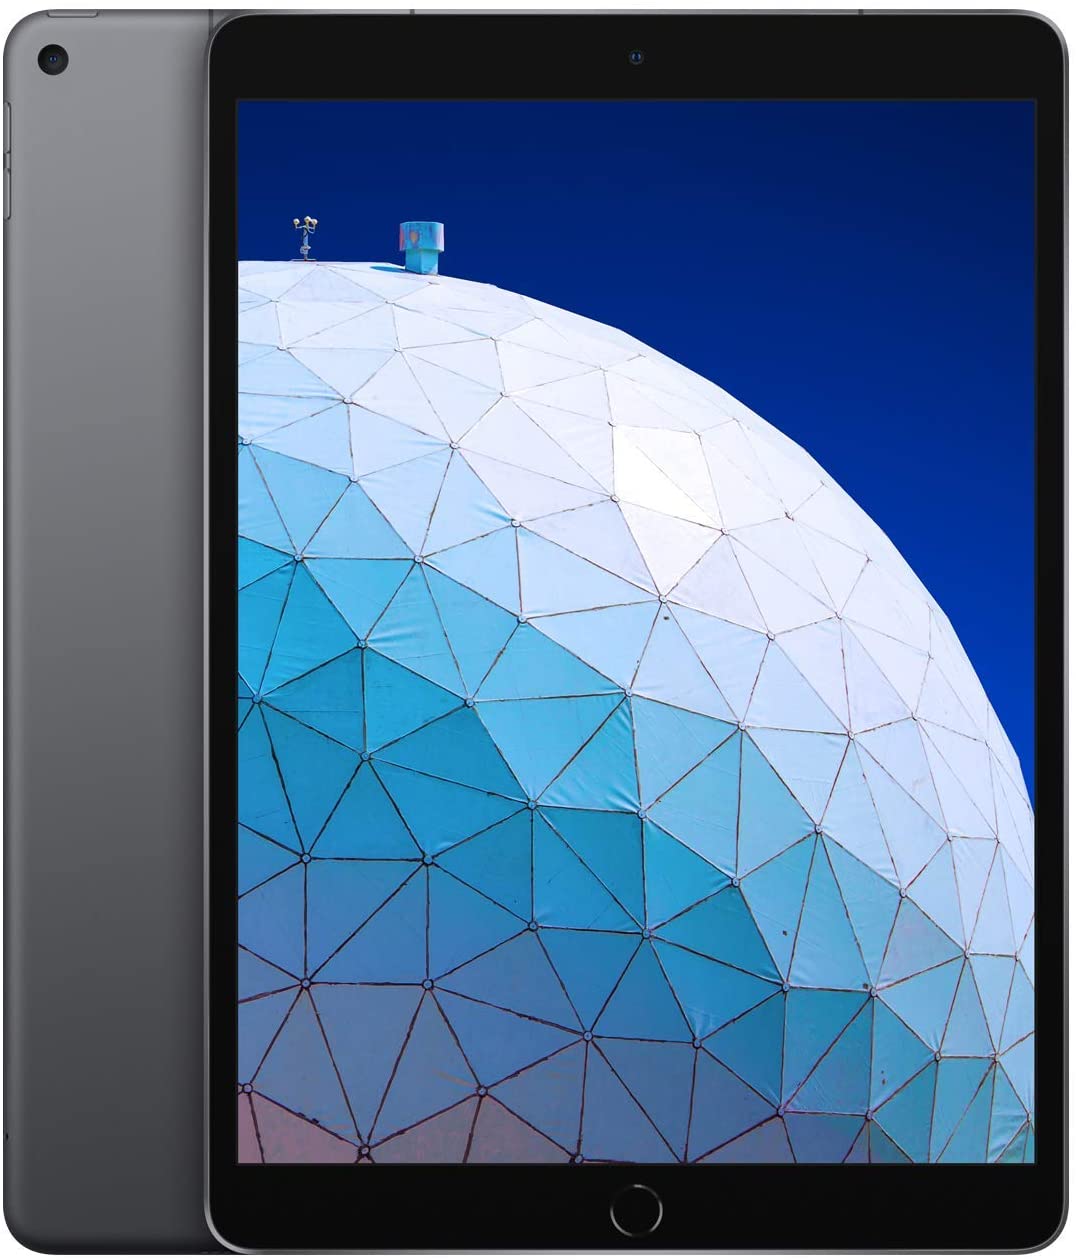 Apple iPad Air 3rd Gen (2019) 10.5in 64GB Wifi + Cellular (Unlocked) - Space Gray (Refurbished)